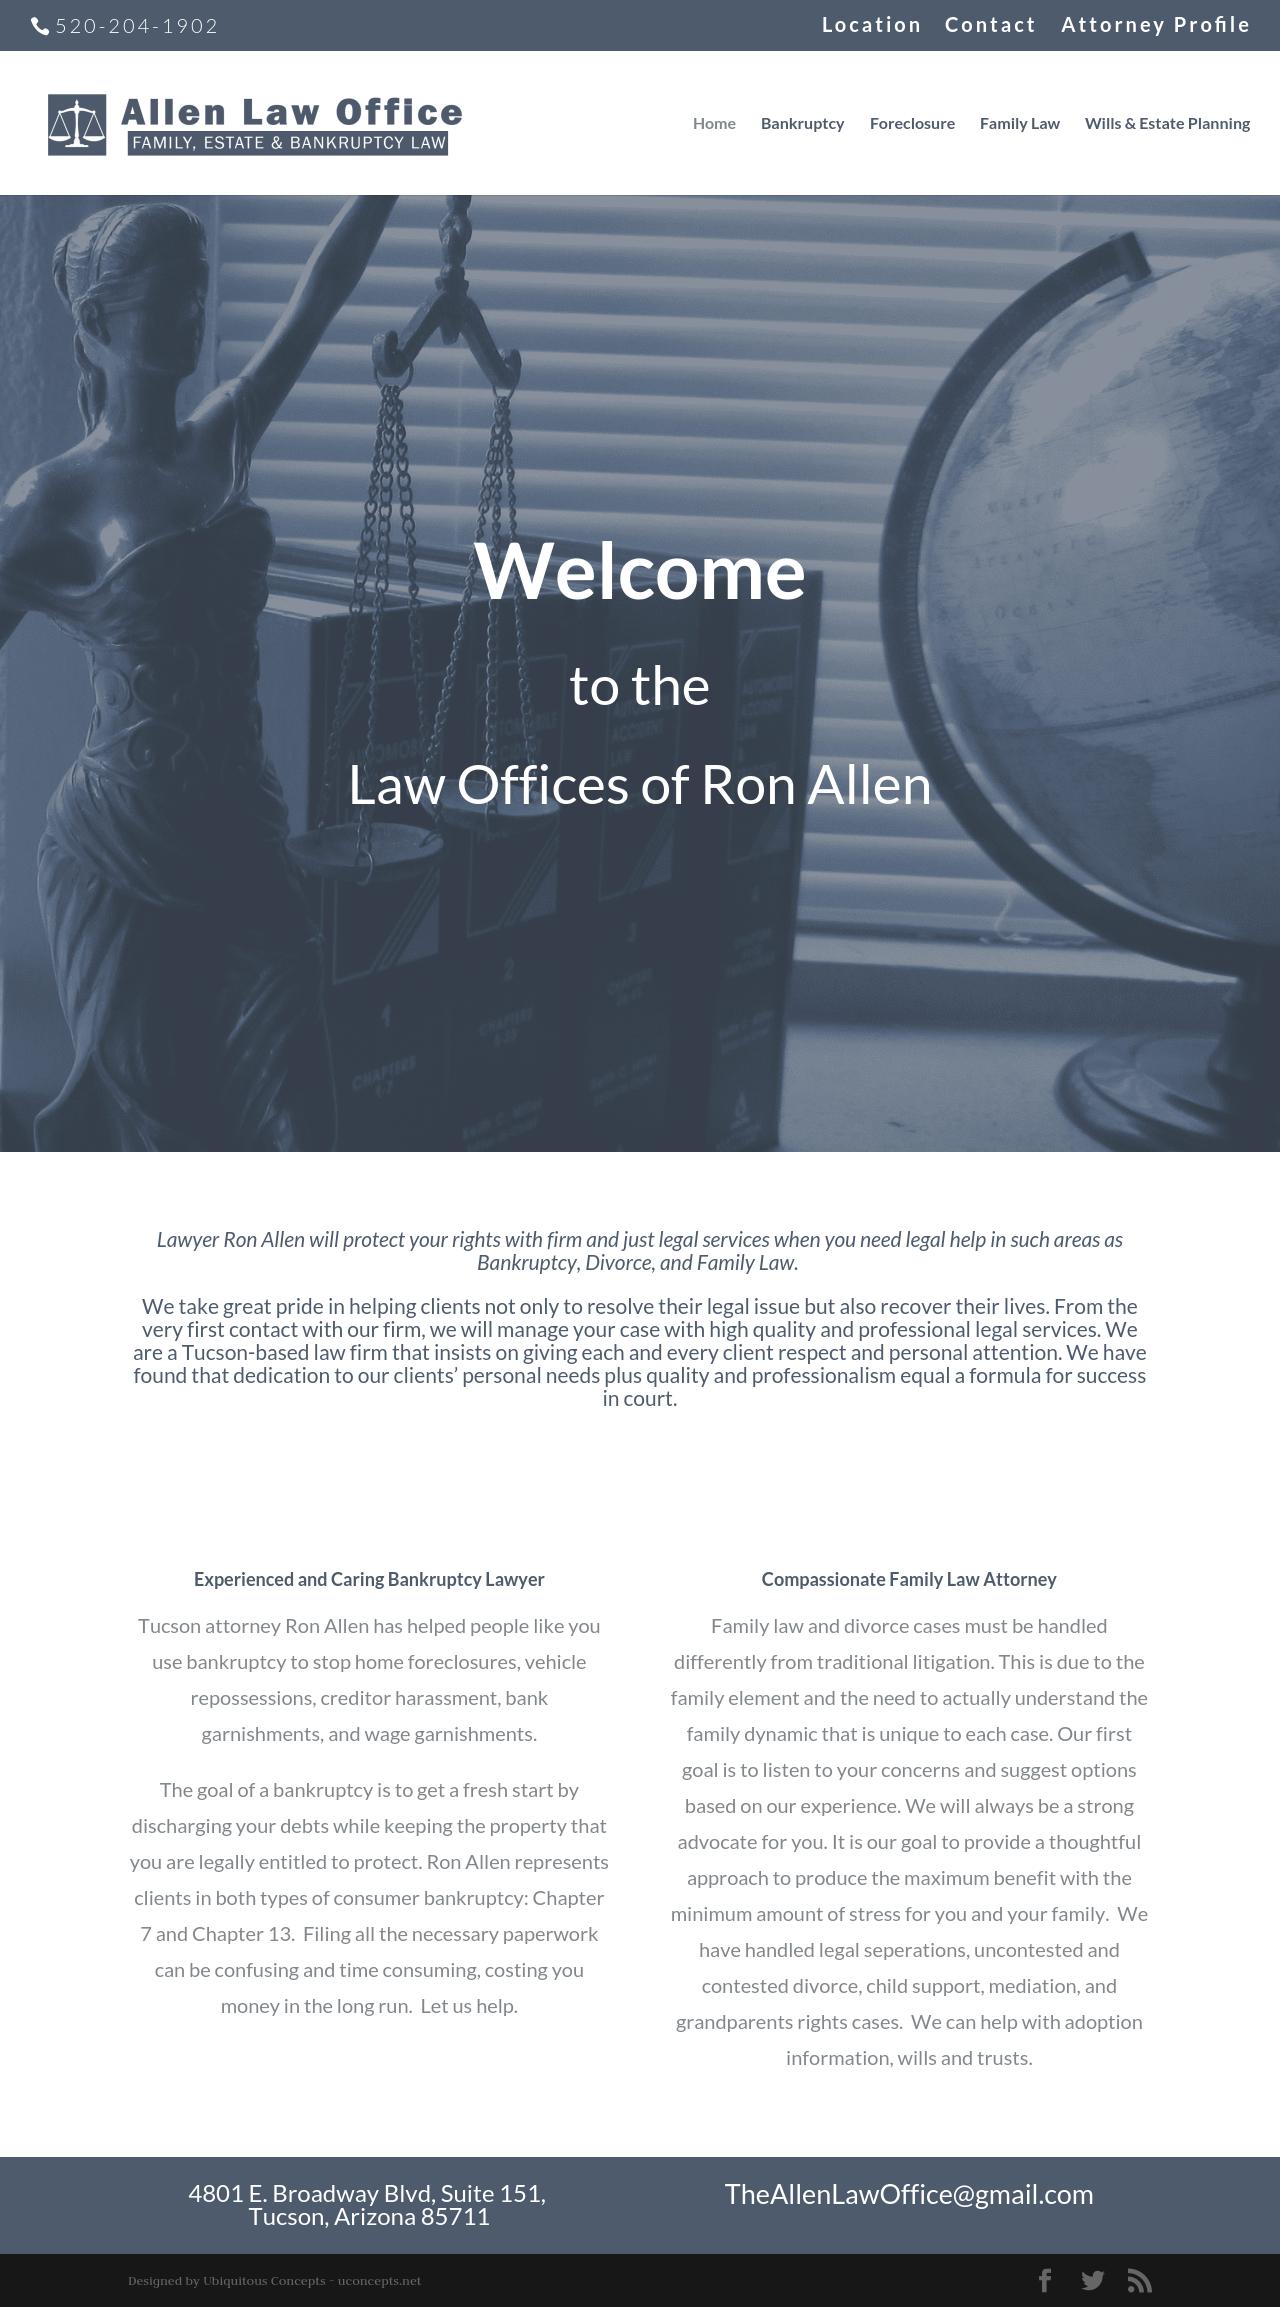 The Allen Law Office - Tucson AZ Lawyers